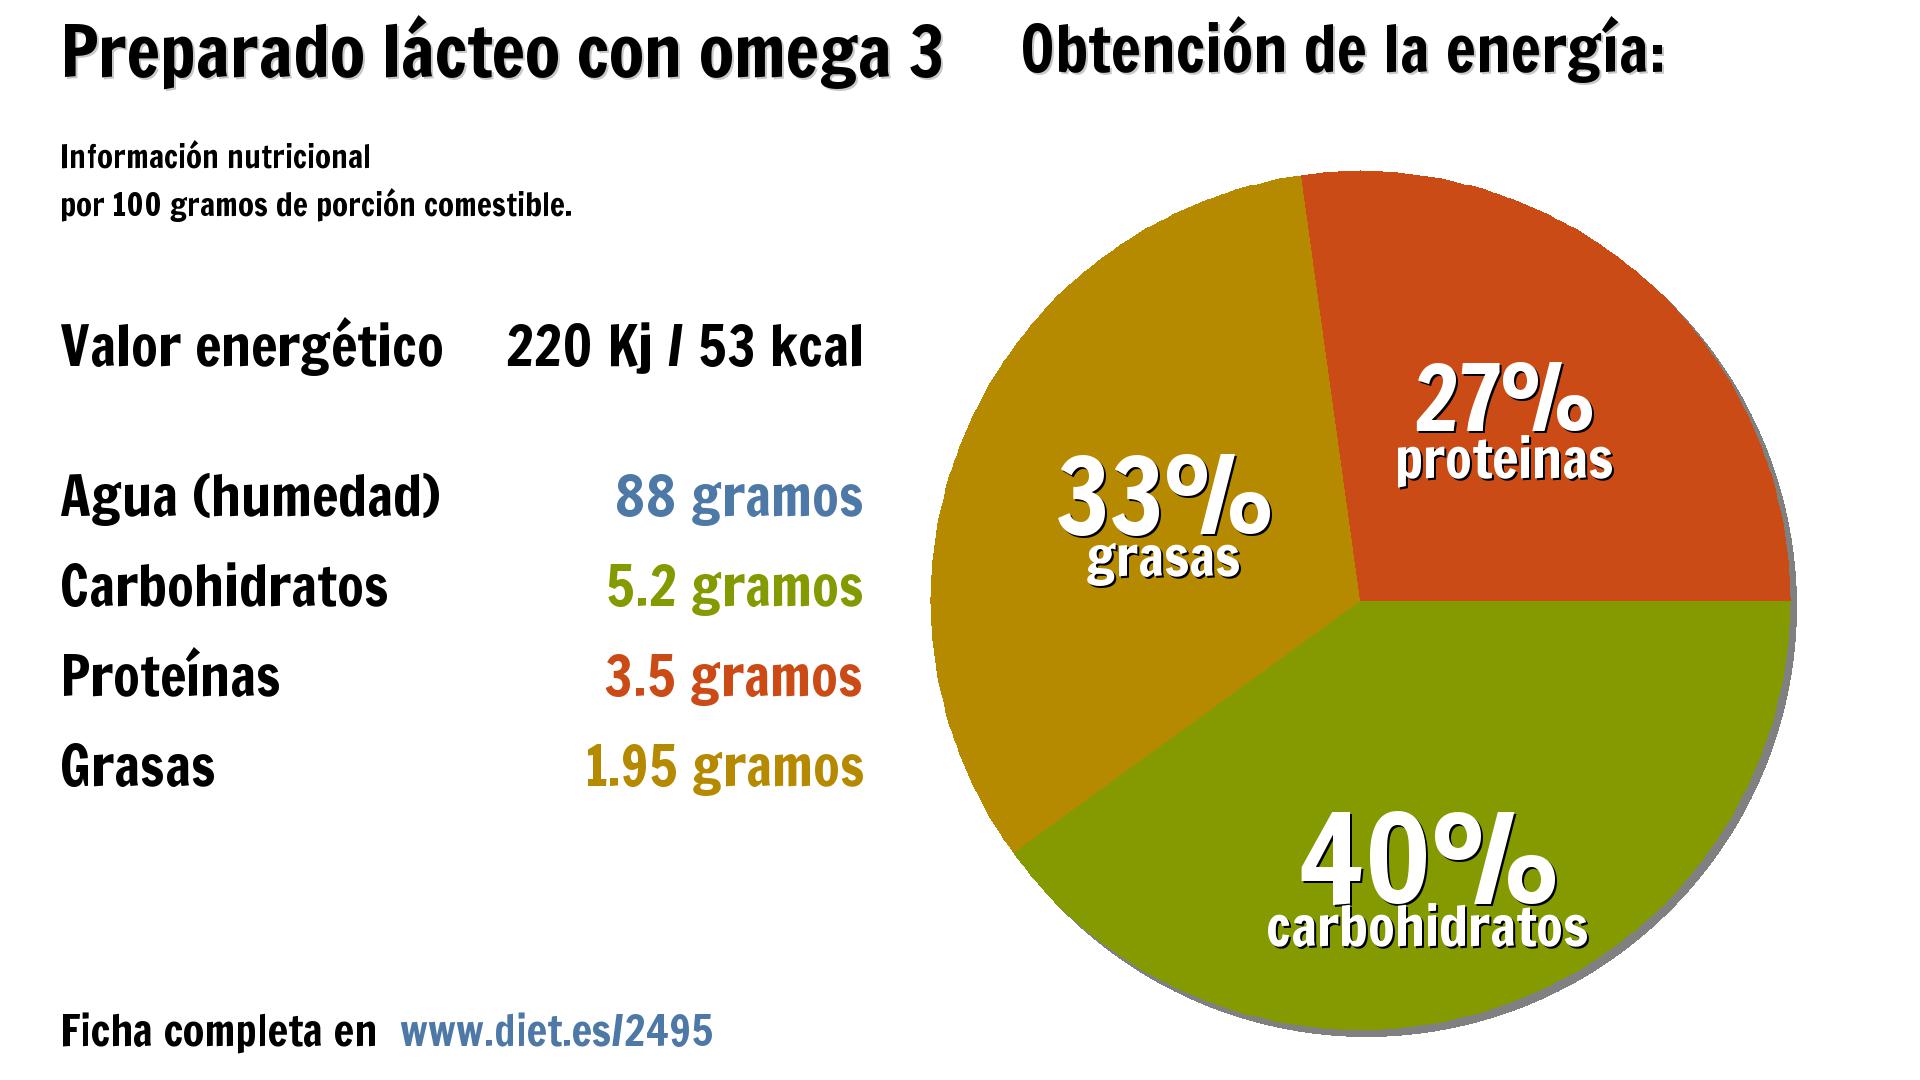 Preparado lácteo con omega 3: energía 220 Kj, agua 88 g., carbohidratos 5 g., proteínas 4 g. y grasas 2 g.